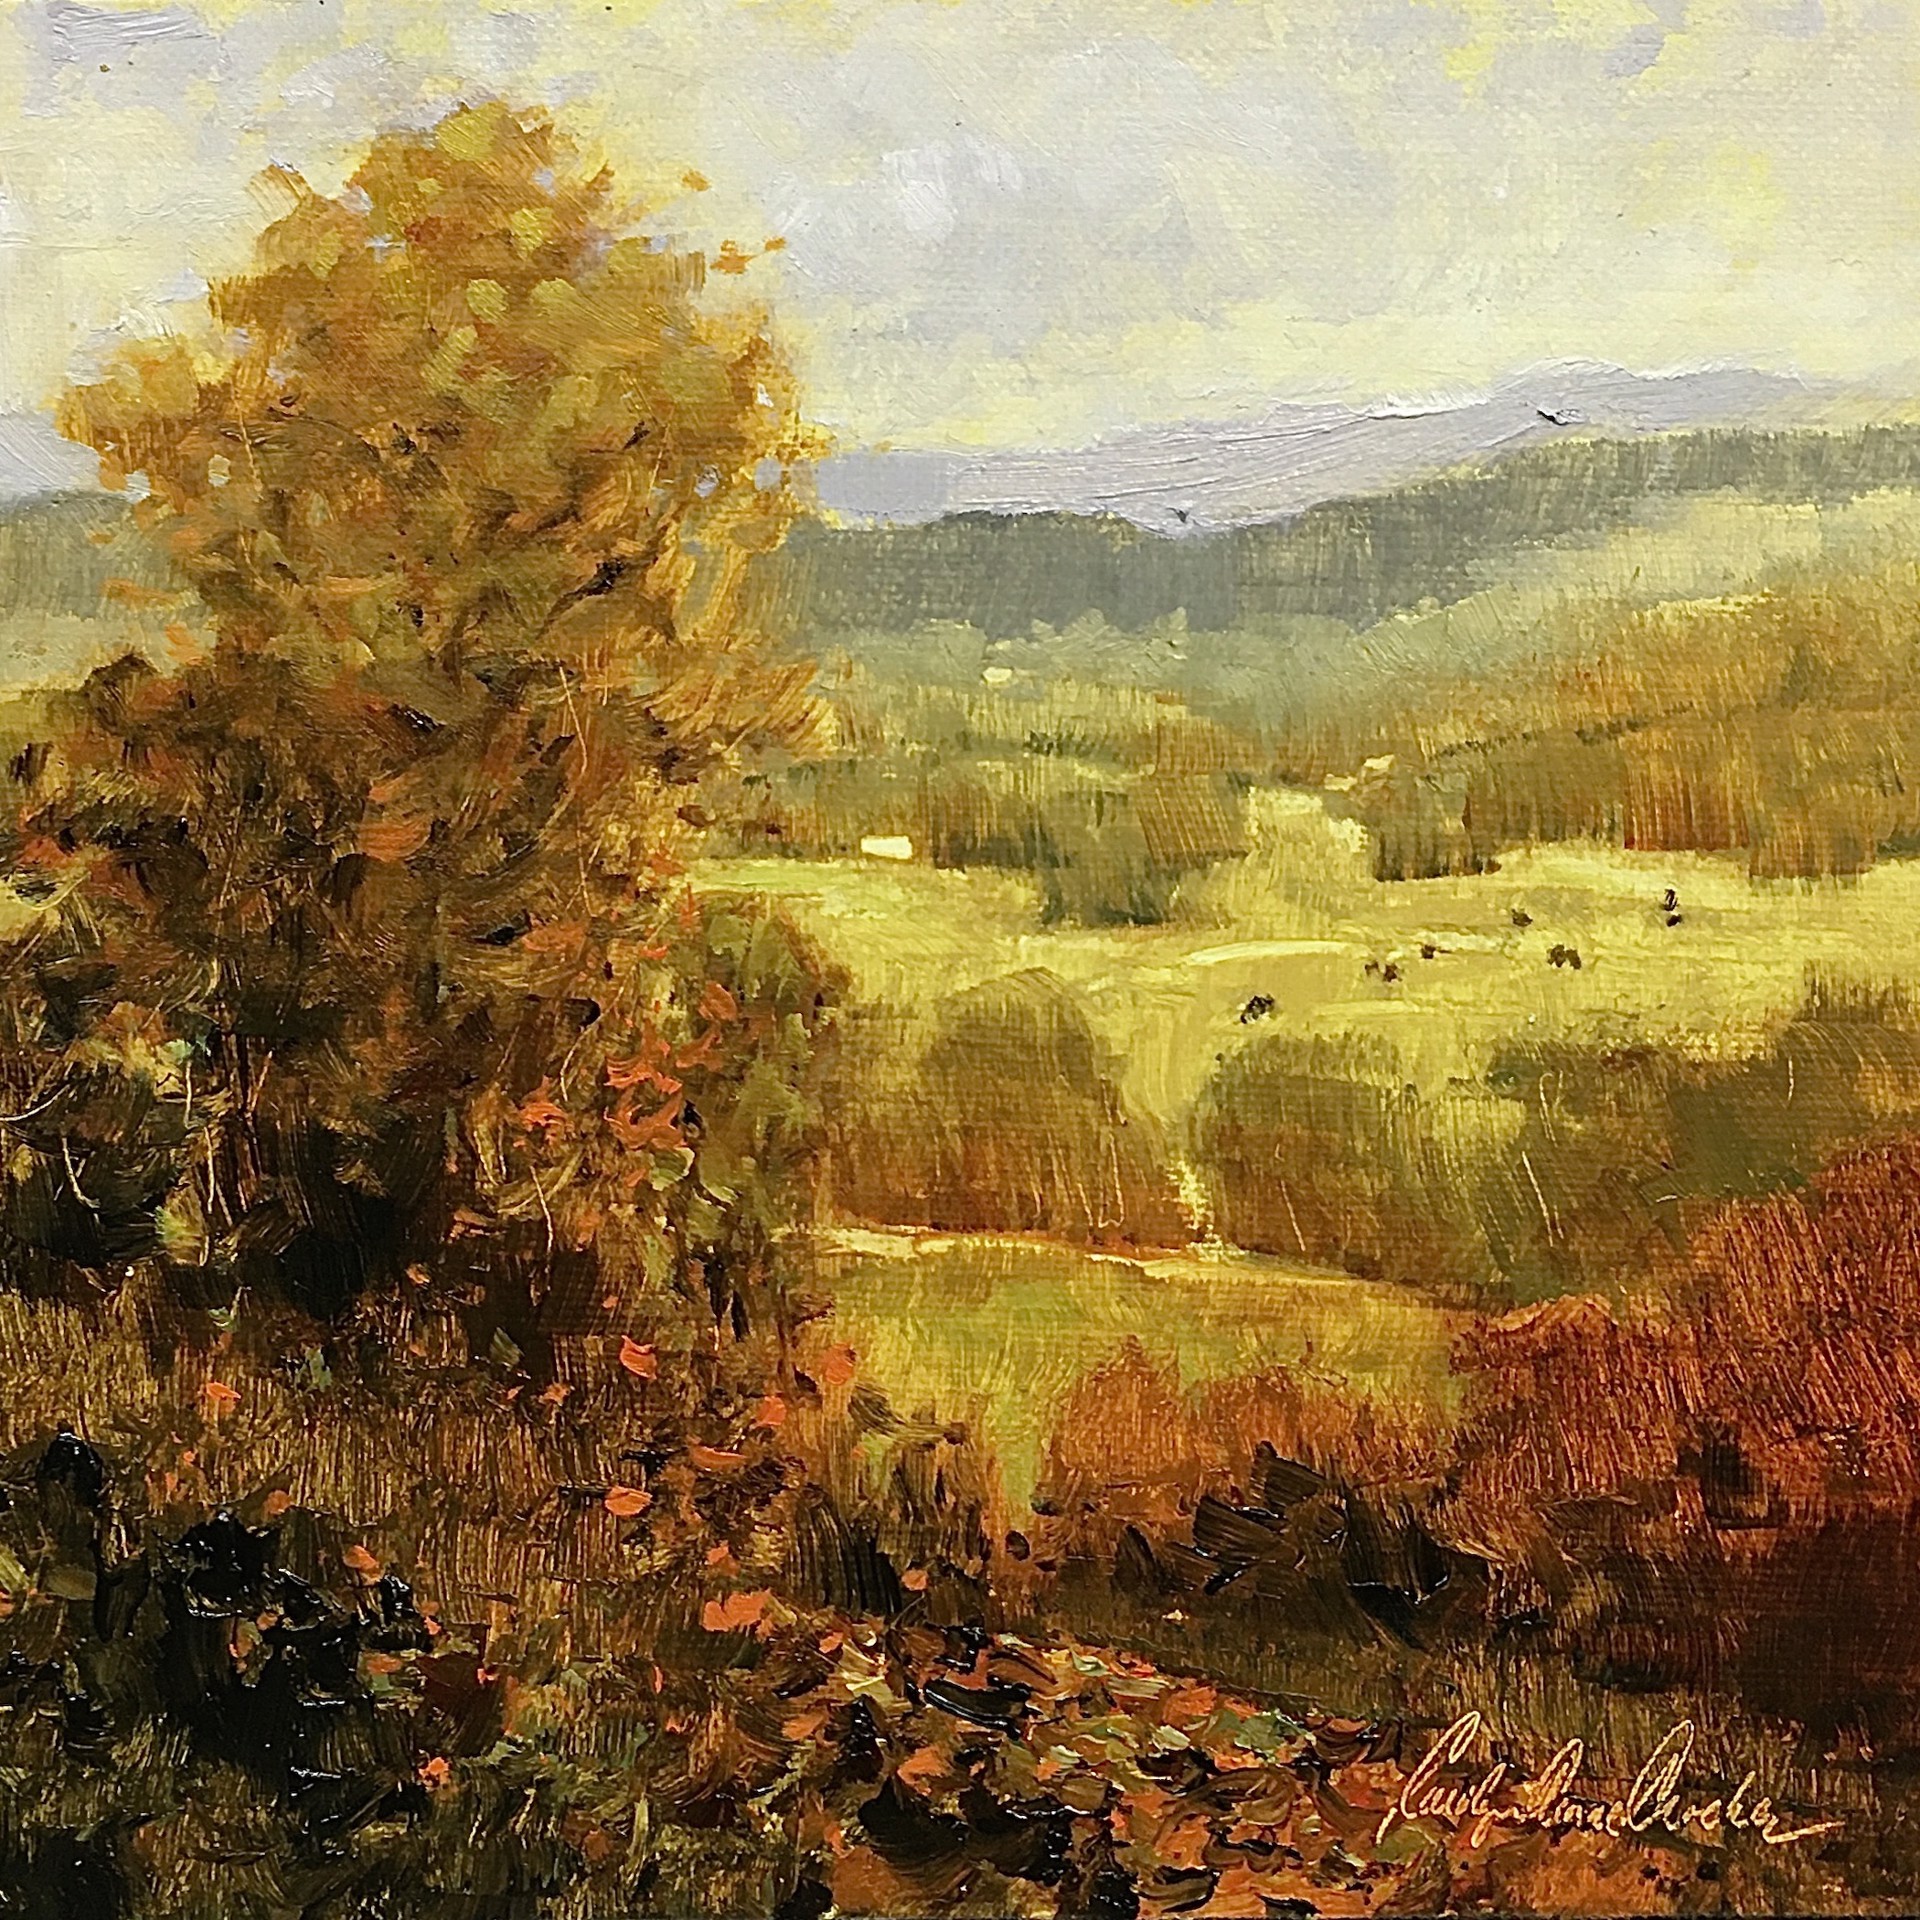 Appalachian Fall by Carolyn Crocker (Rue)